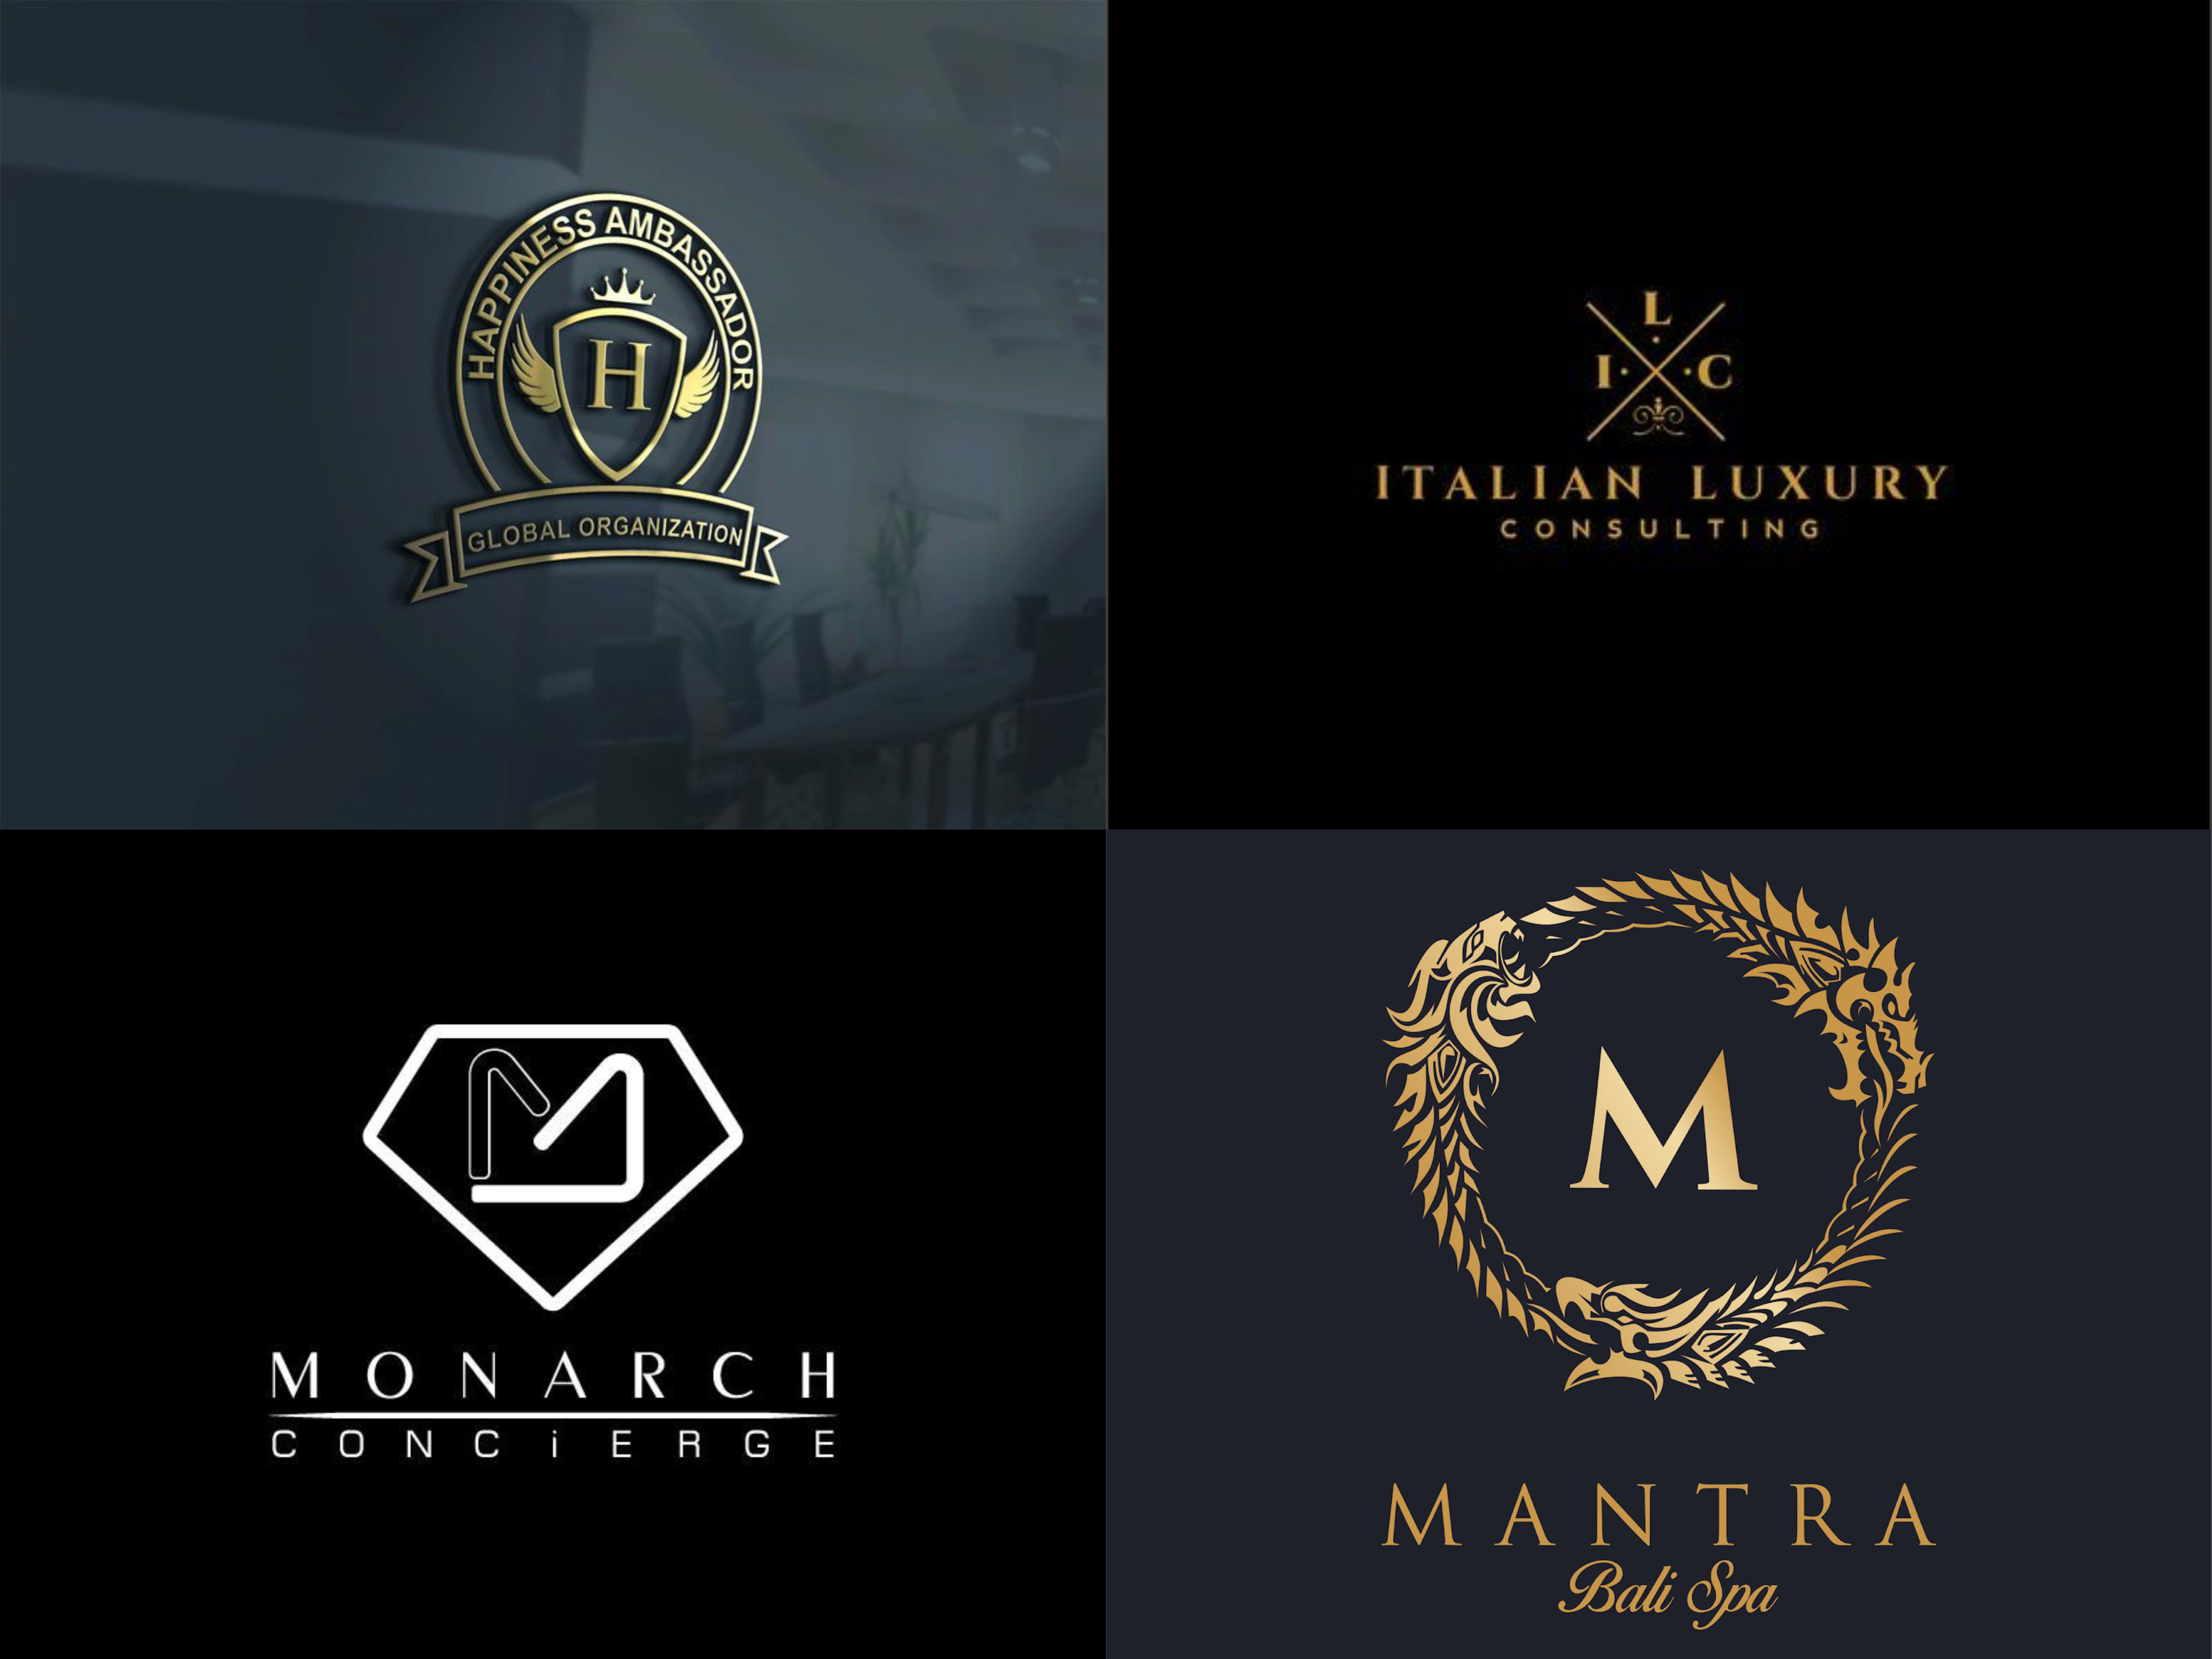 luxury brand logo design